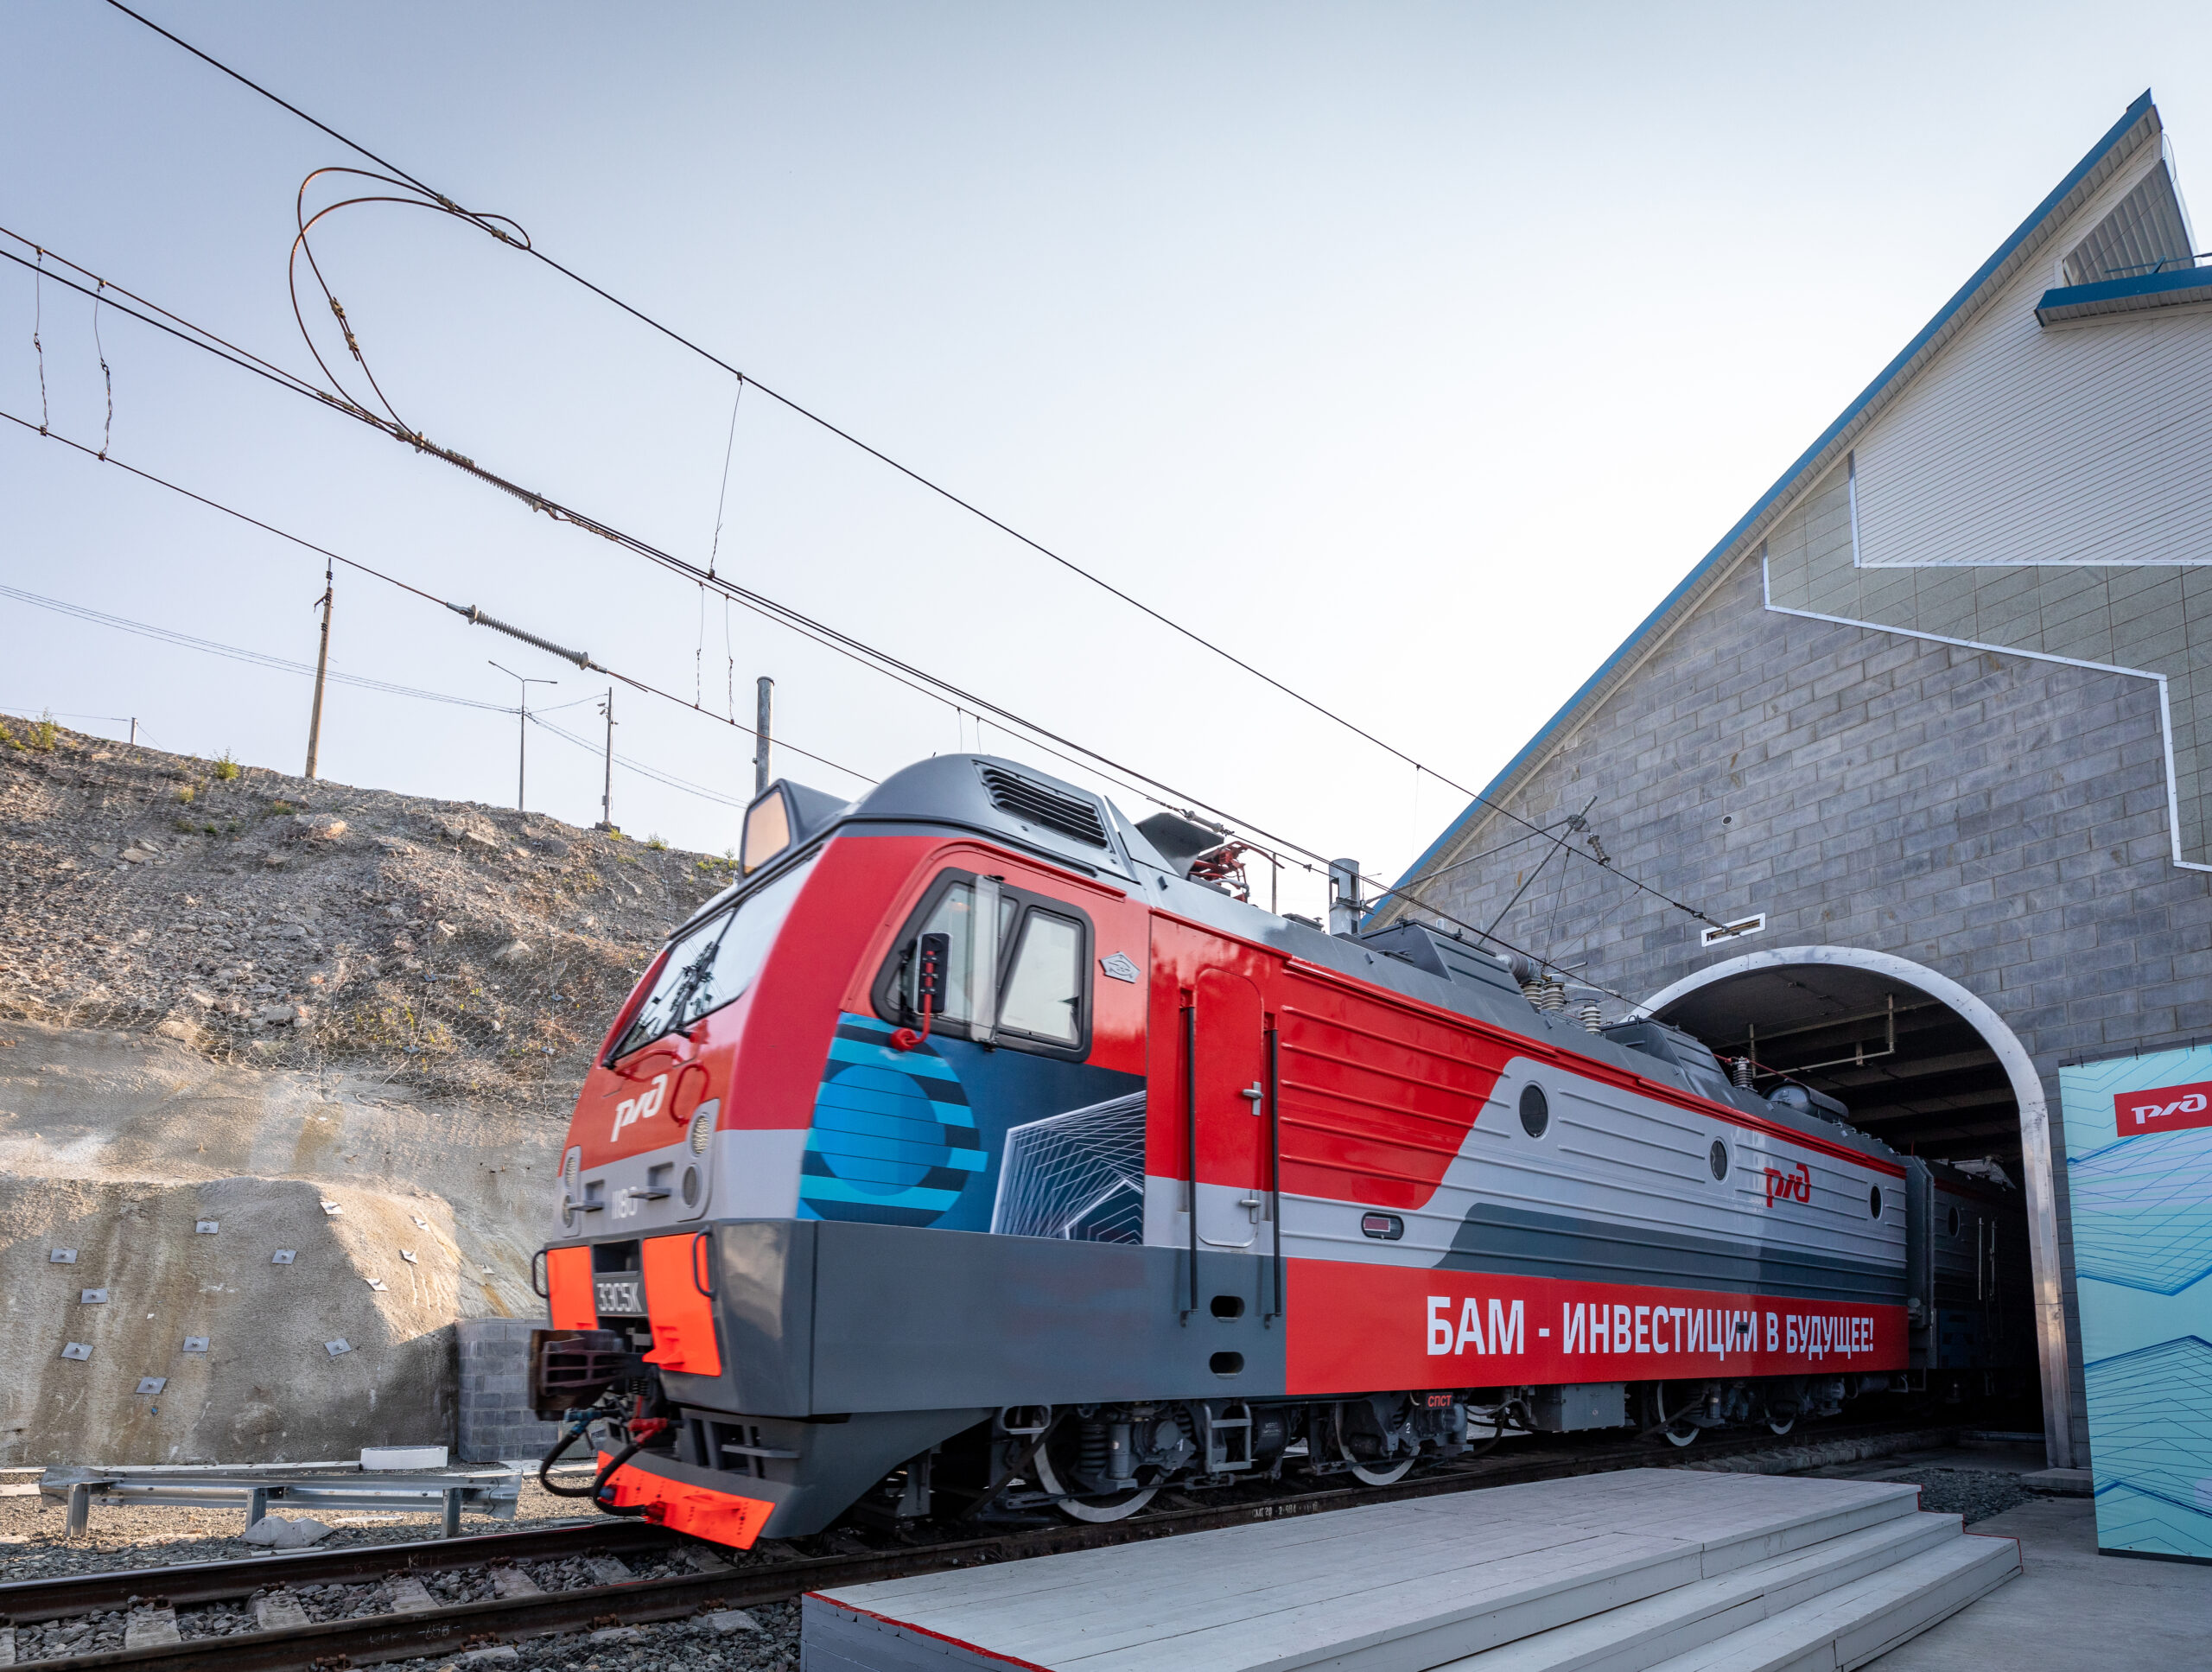 Putin Opens Second Tunnel on Baikal-Amur Mainline | Railway-News